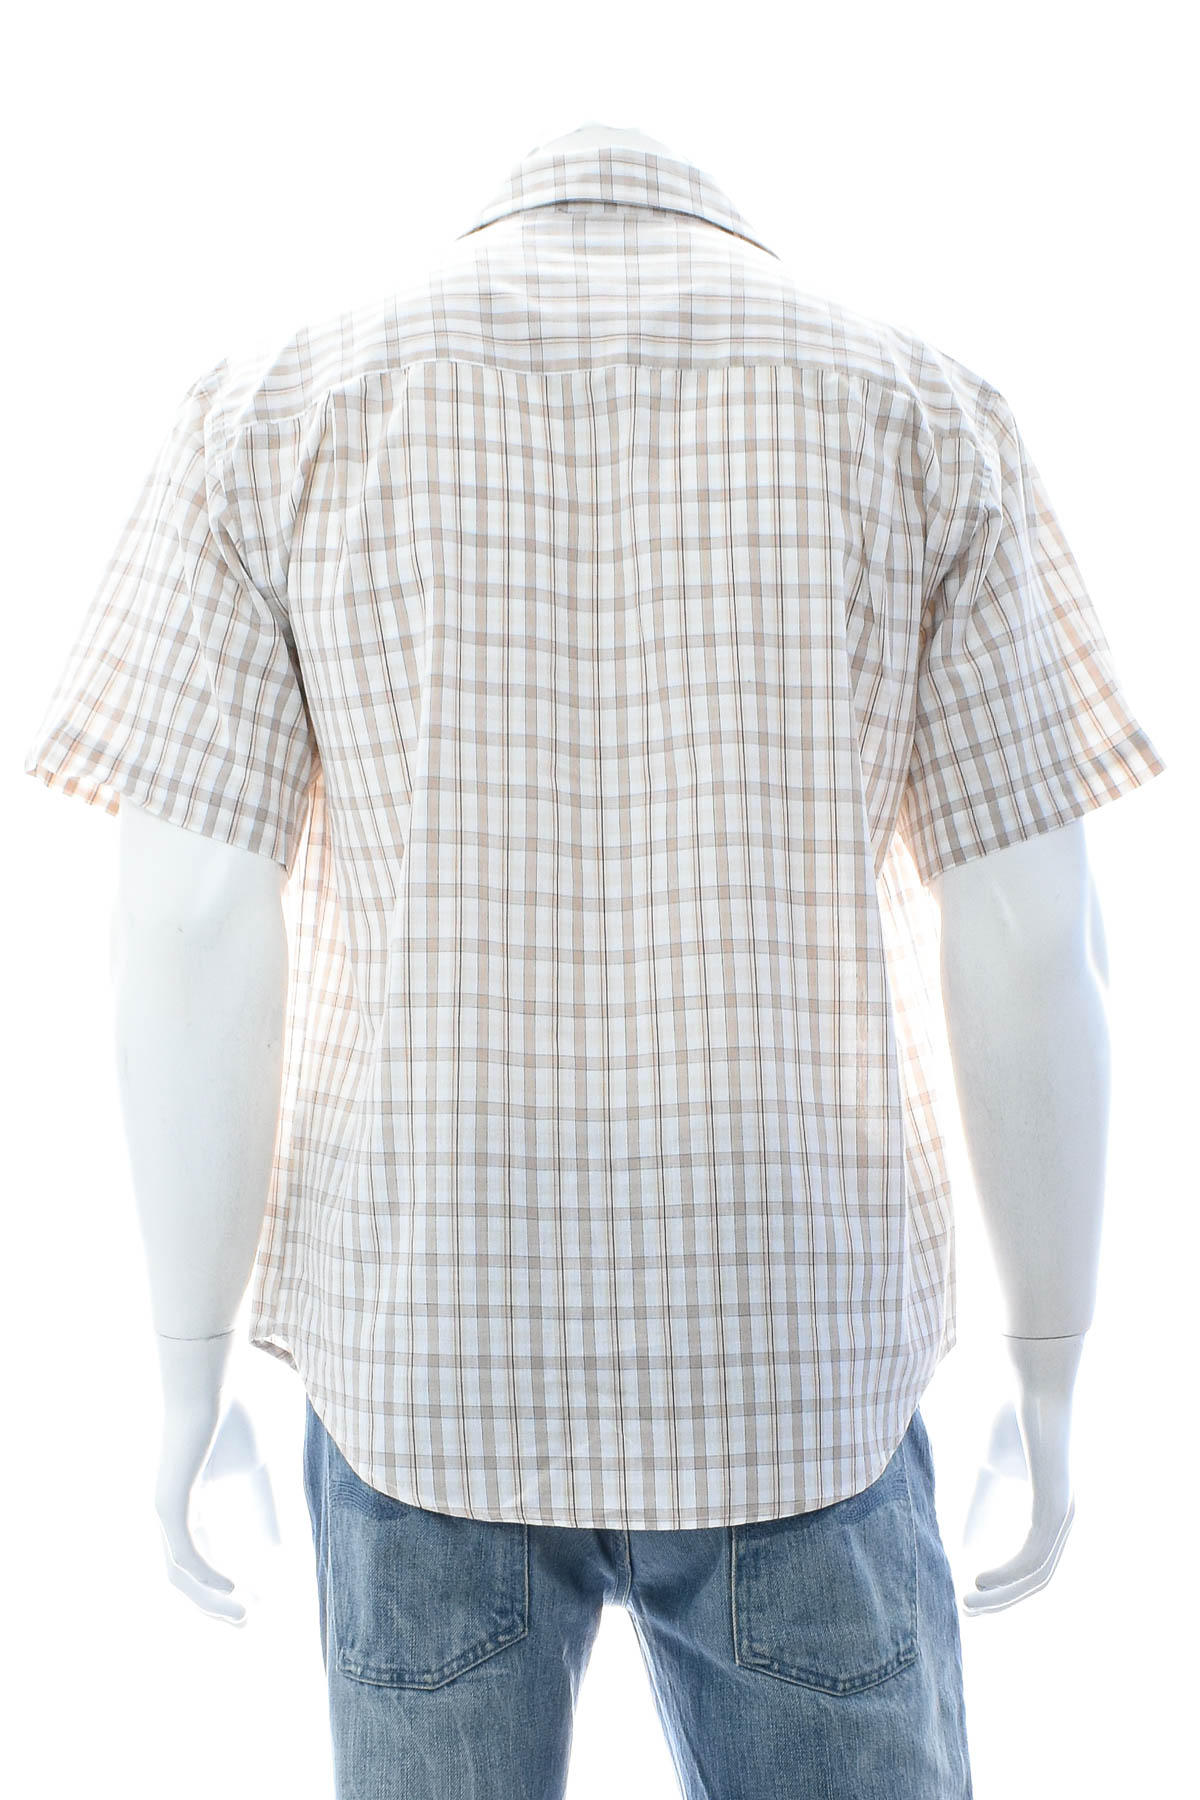 Men's shirt - MAXCLUSIV - 1